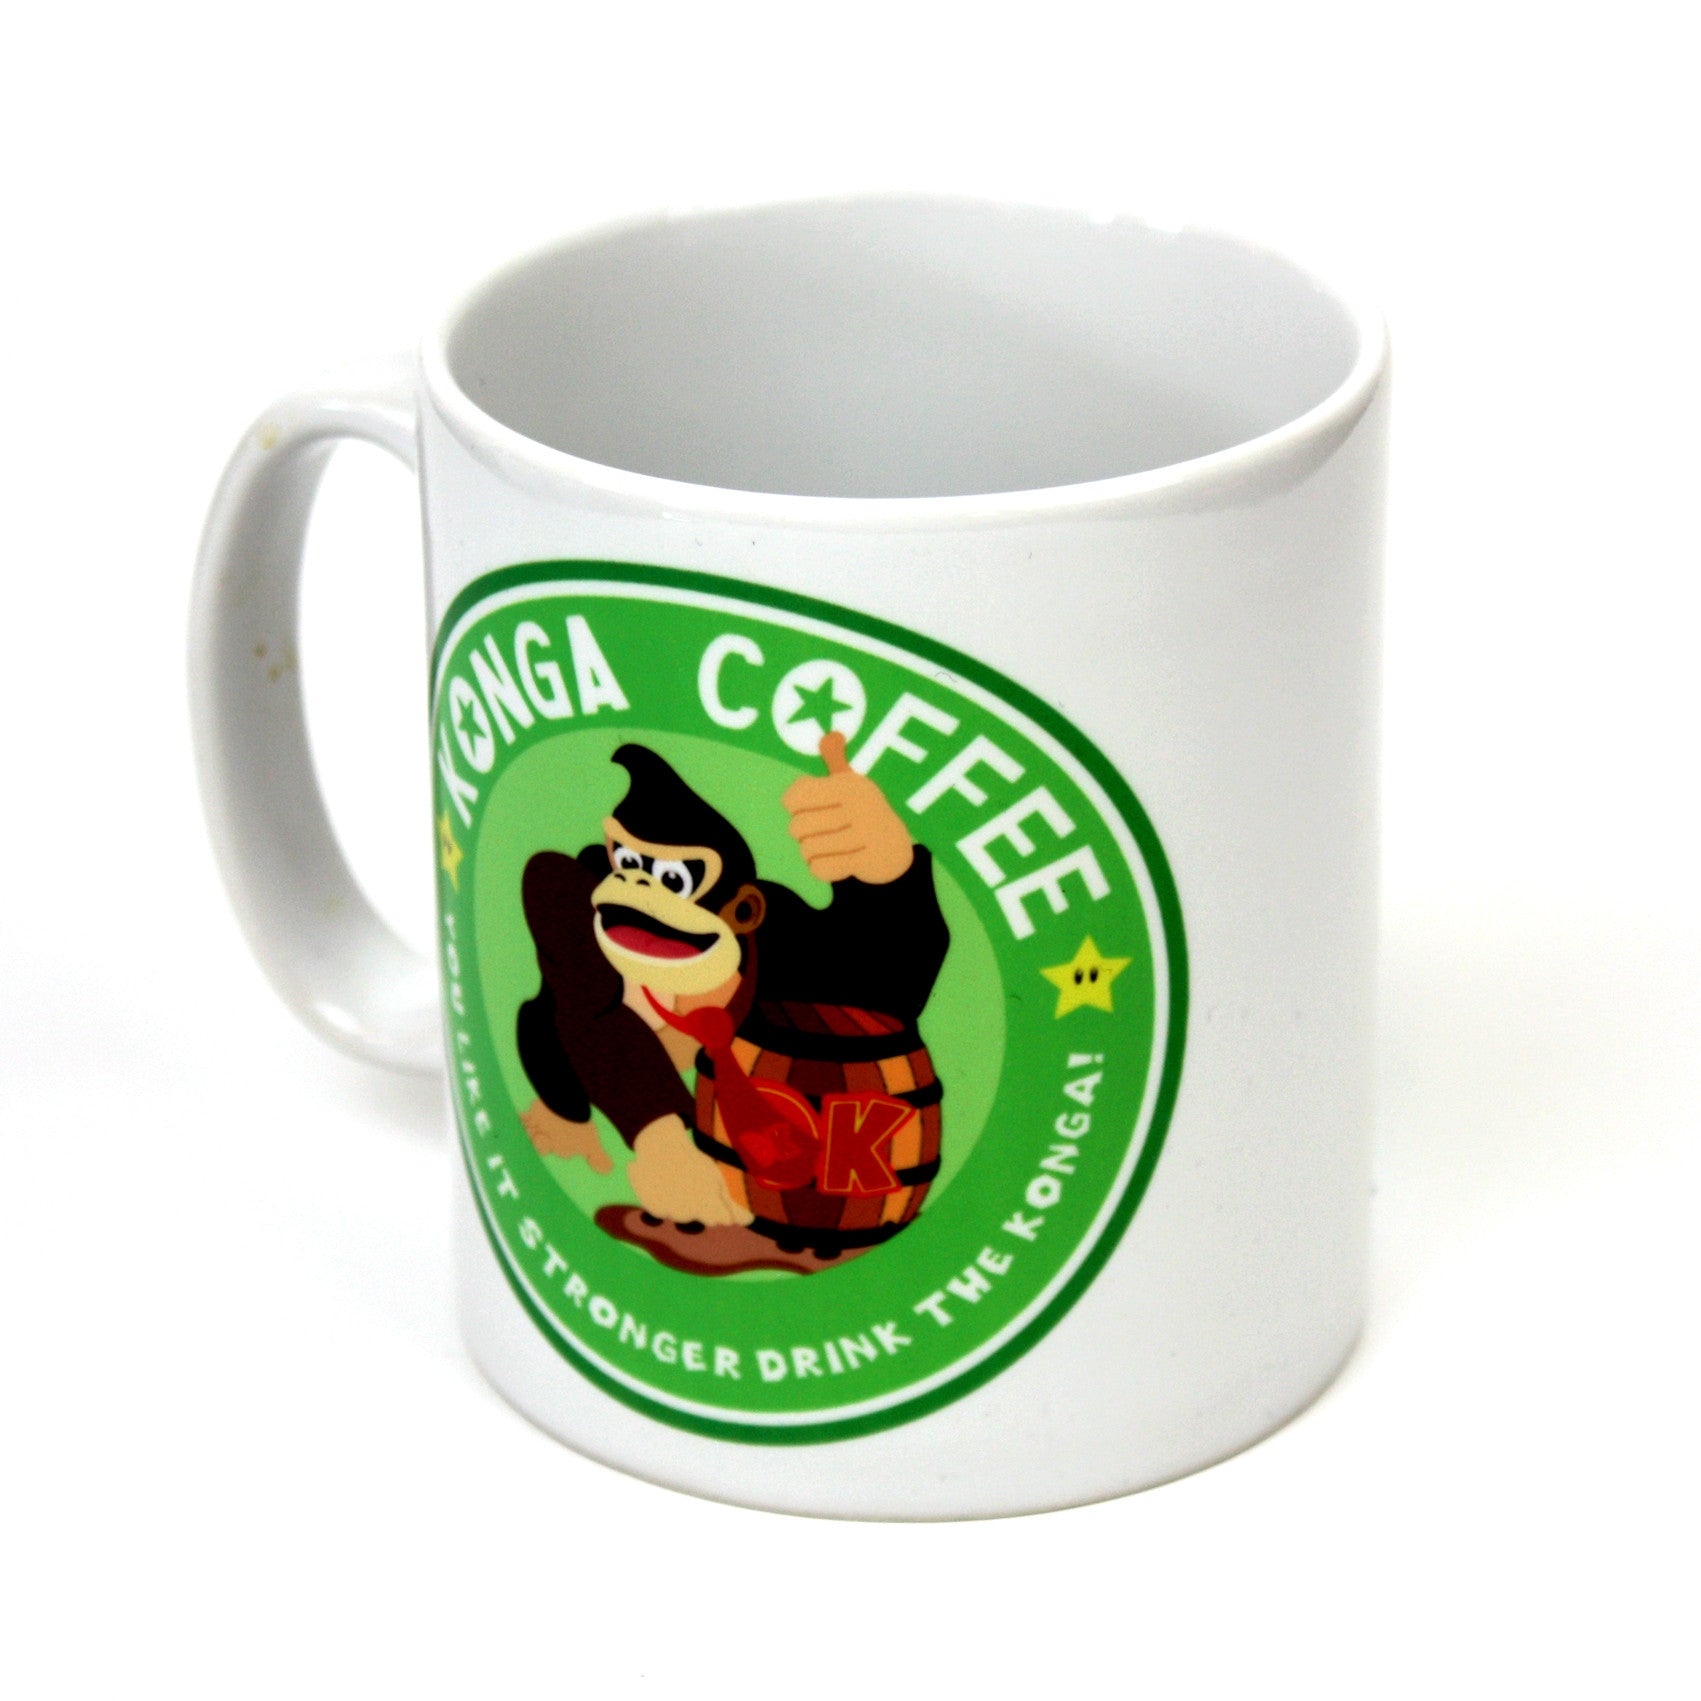 Konga coffee donkey kong inspired mug by Happy Piranha